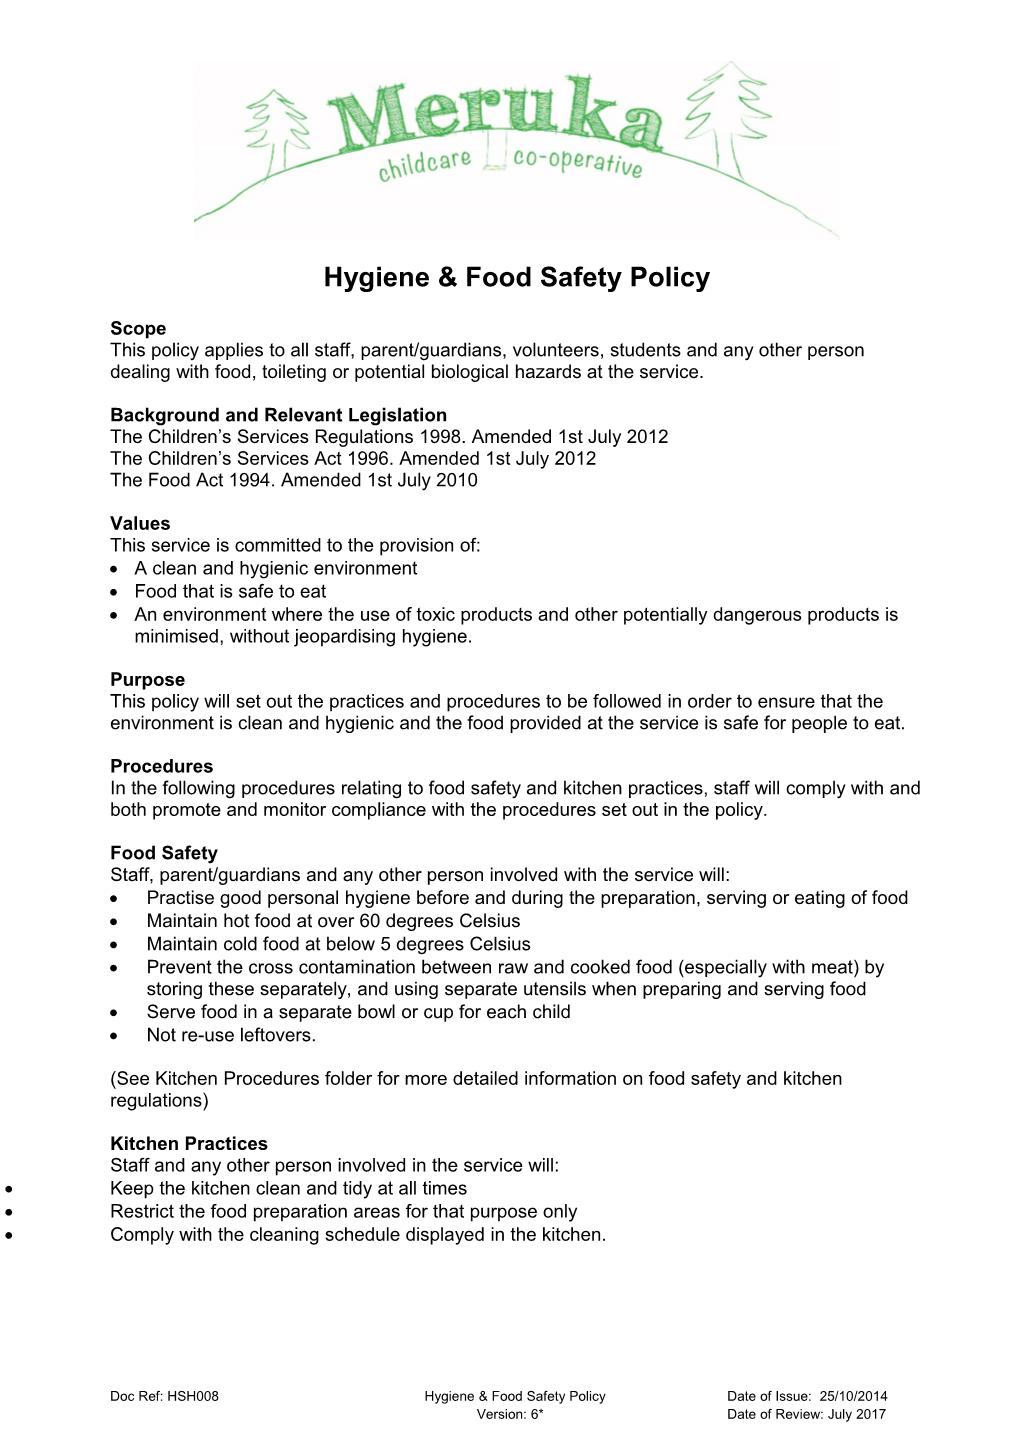 Hygiene & Food Safetypolicy